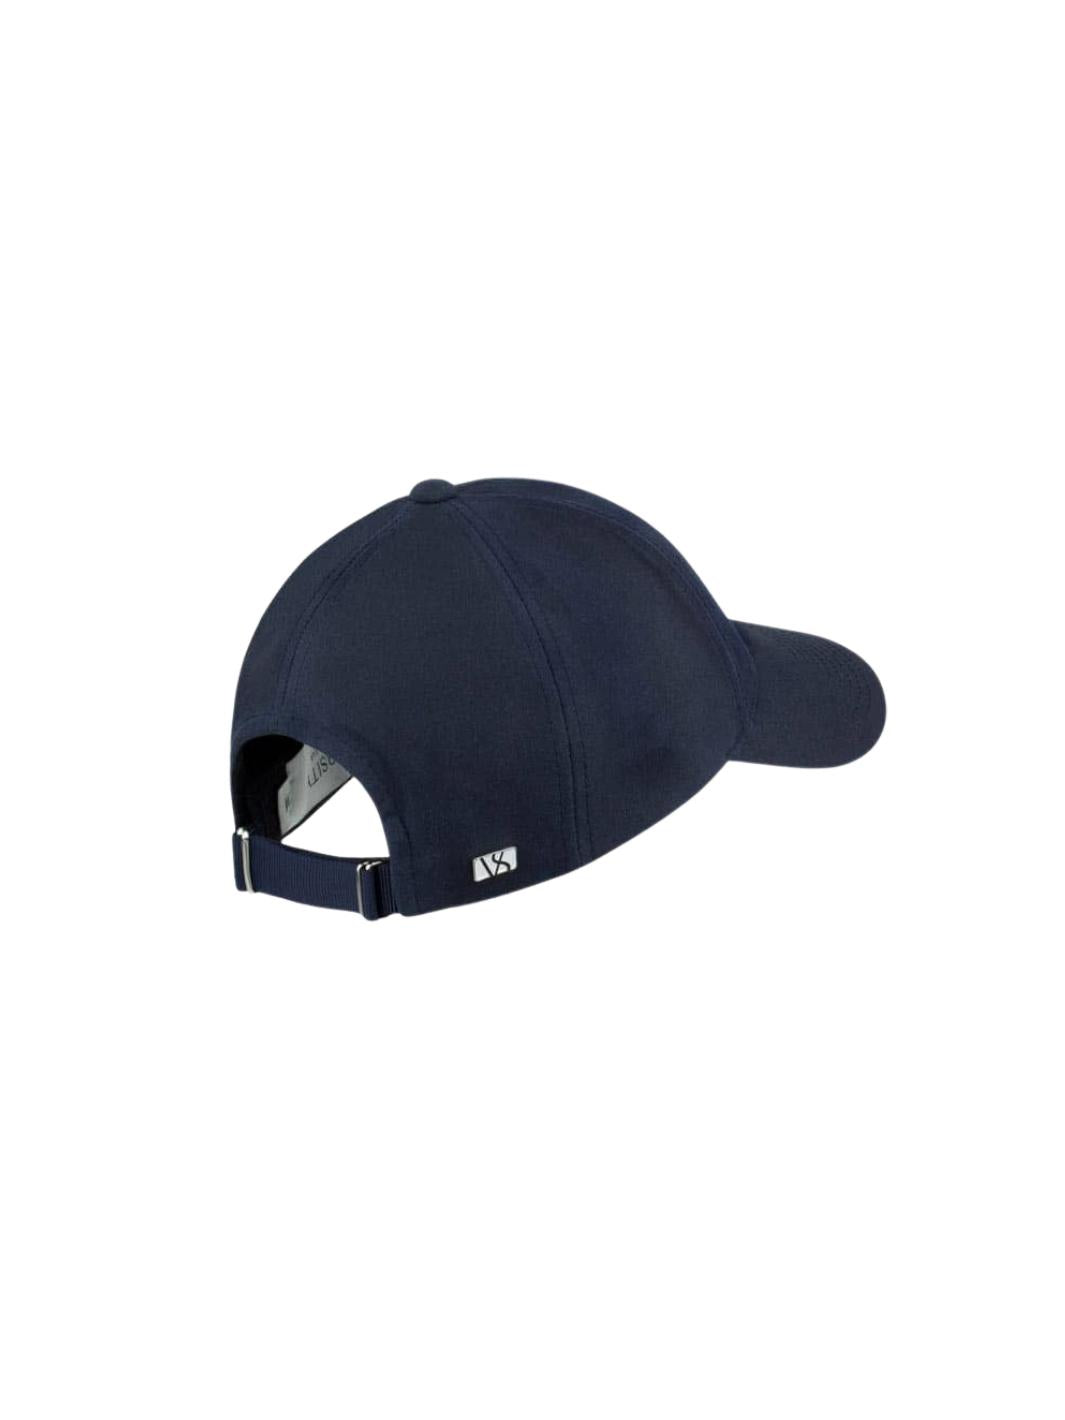 Varsity Headwear Accessories Cap | Navy Oilskin